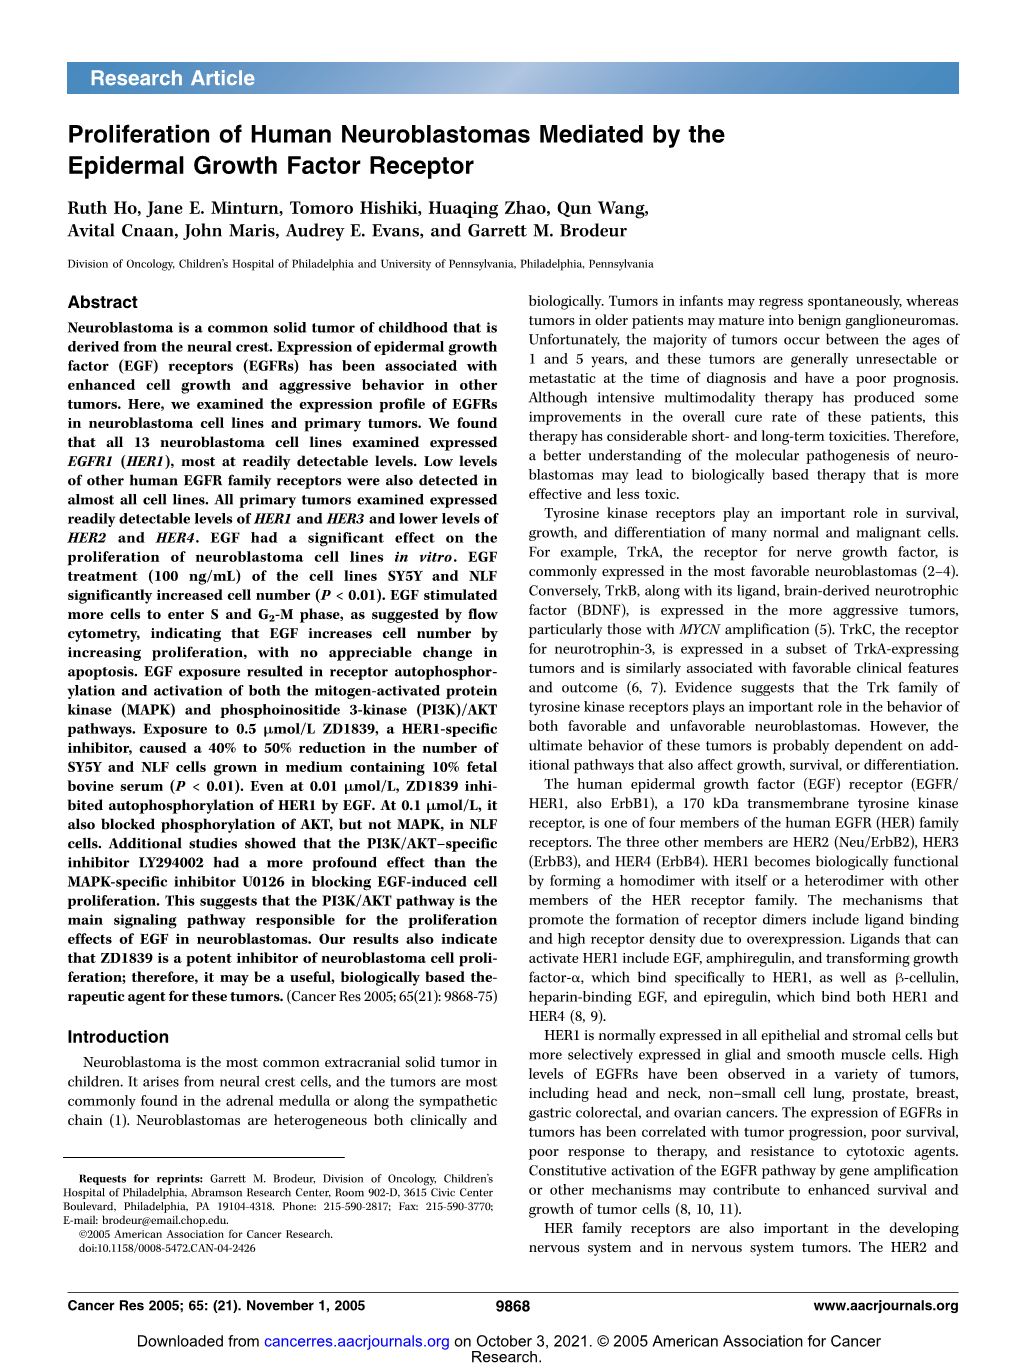 Proliferation of Human Neuroblastomas Mediated by the Epidermal Growth Factor Receptor